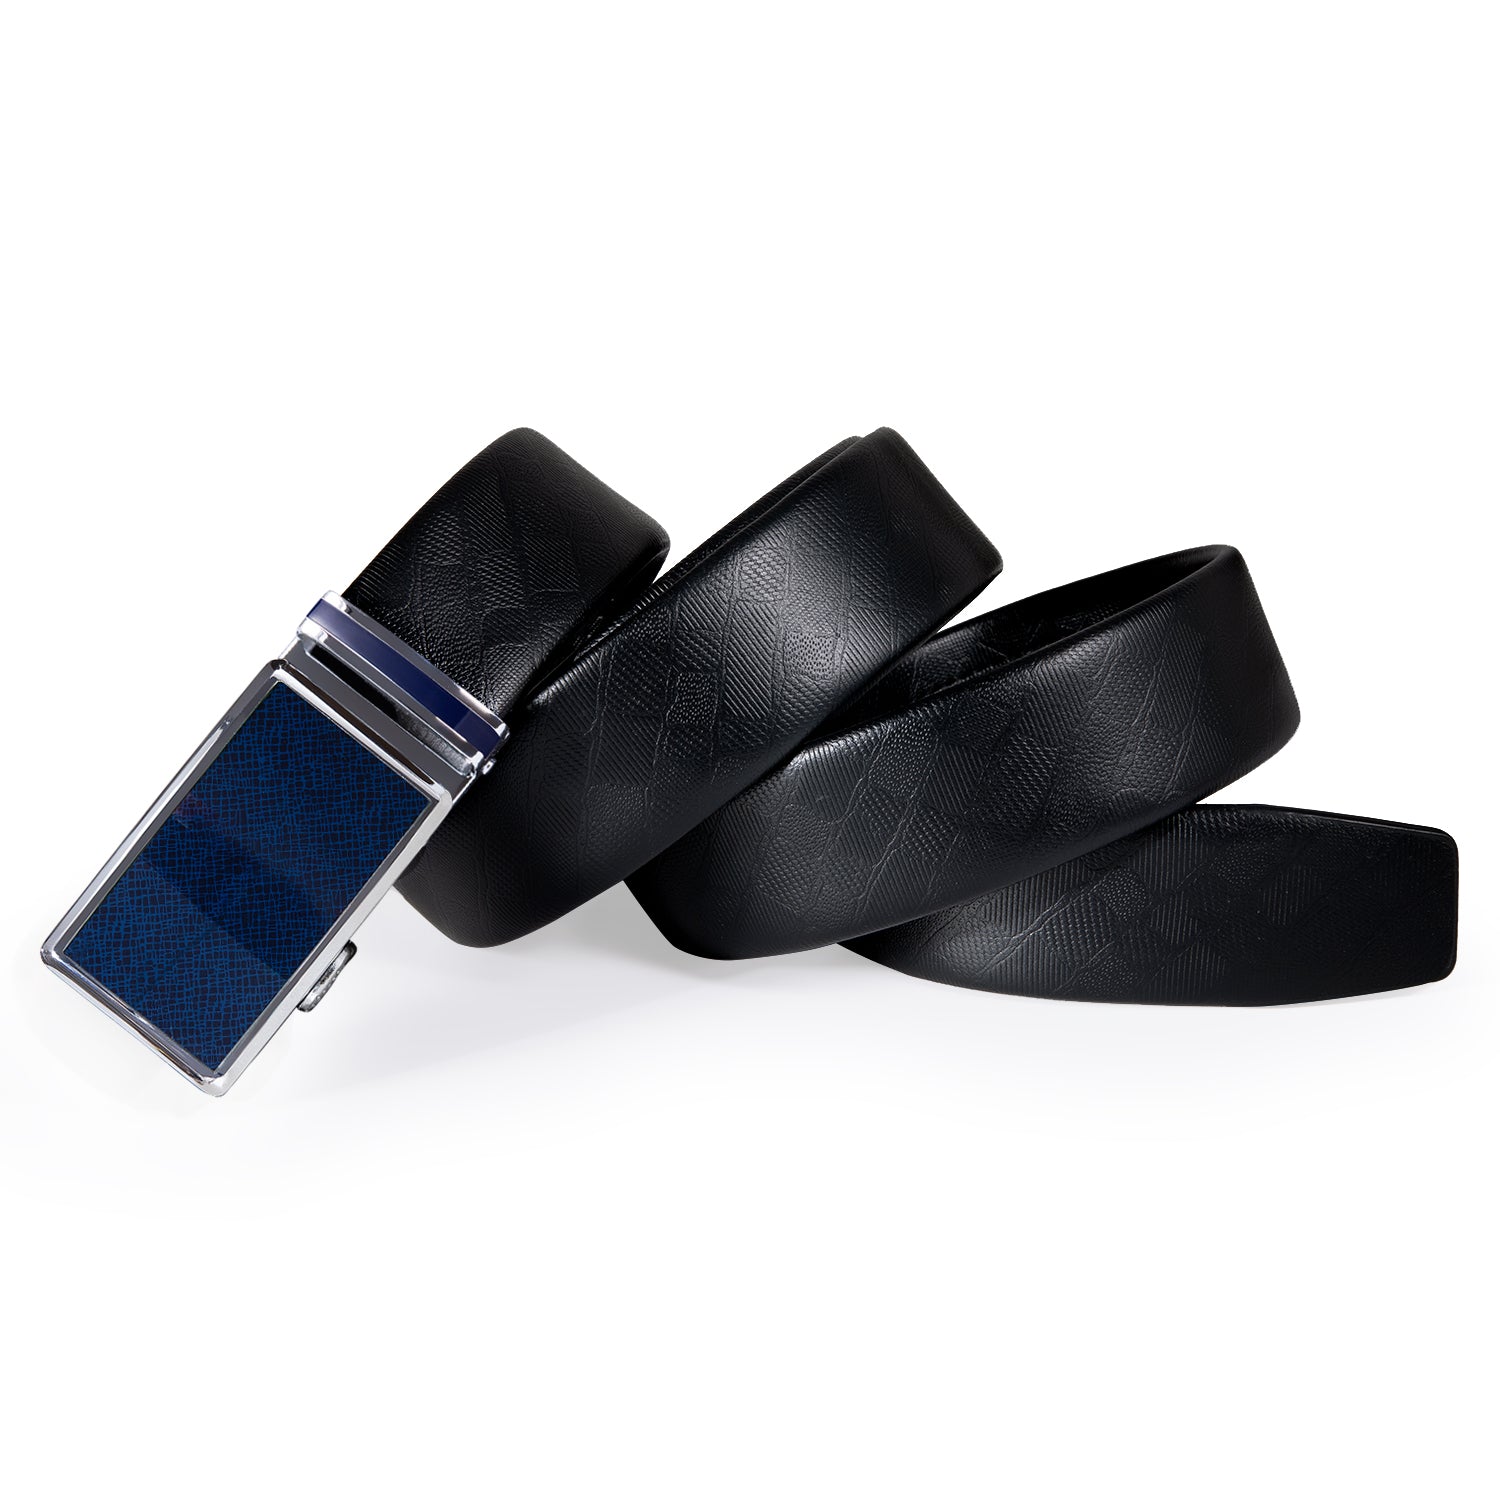 Blue Metal Buckle Genuine Leather Belt 110cm-160cm